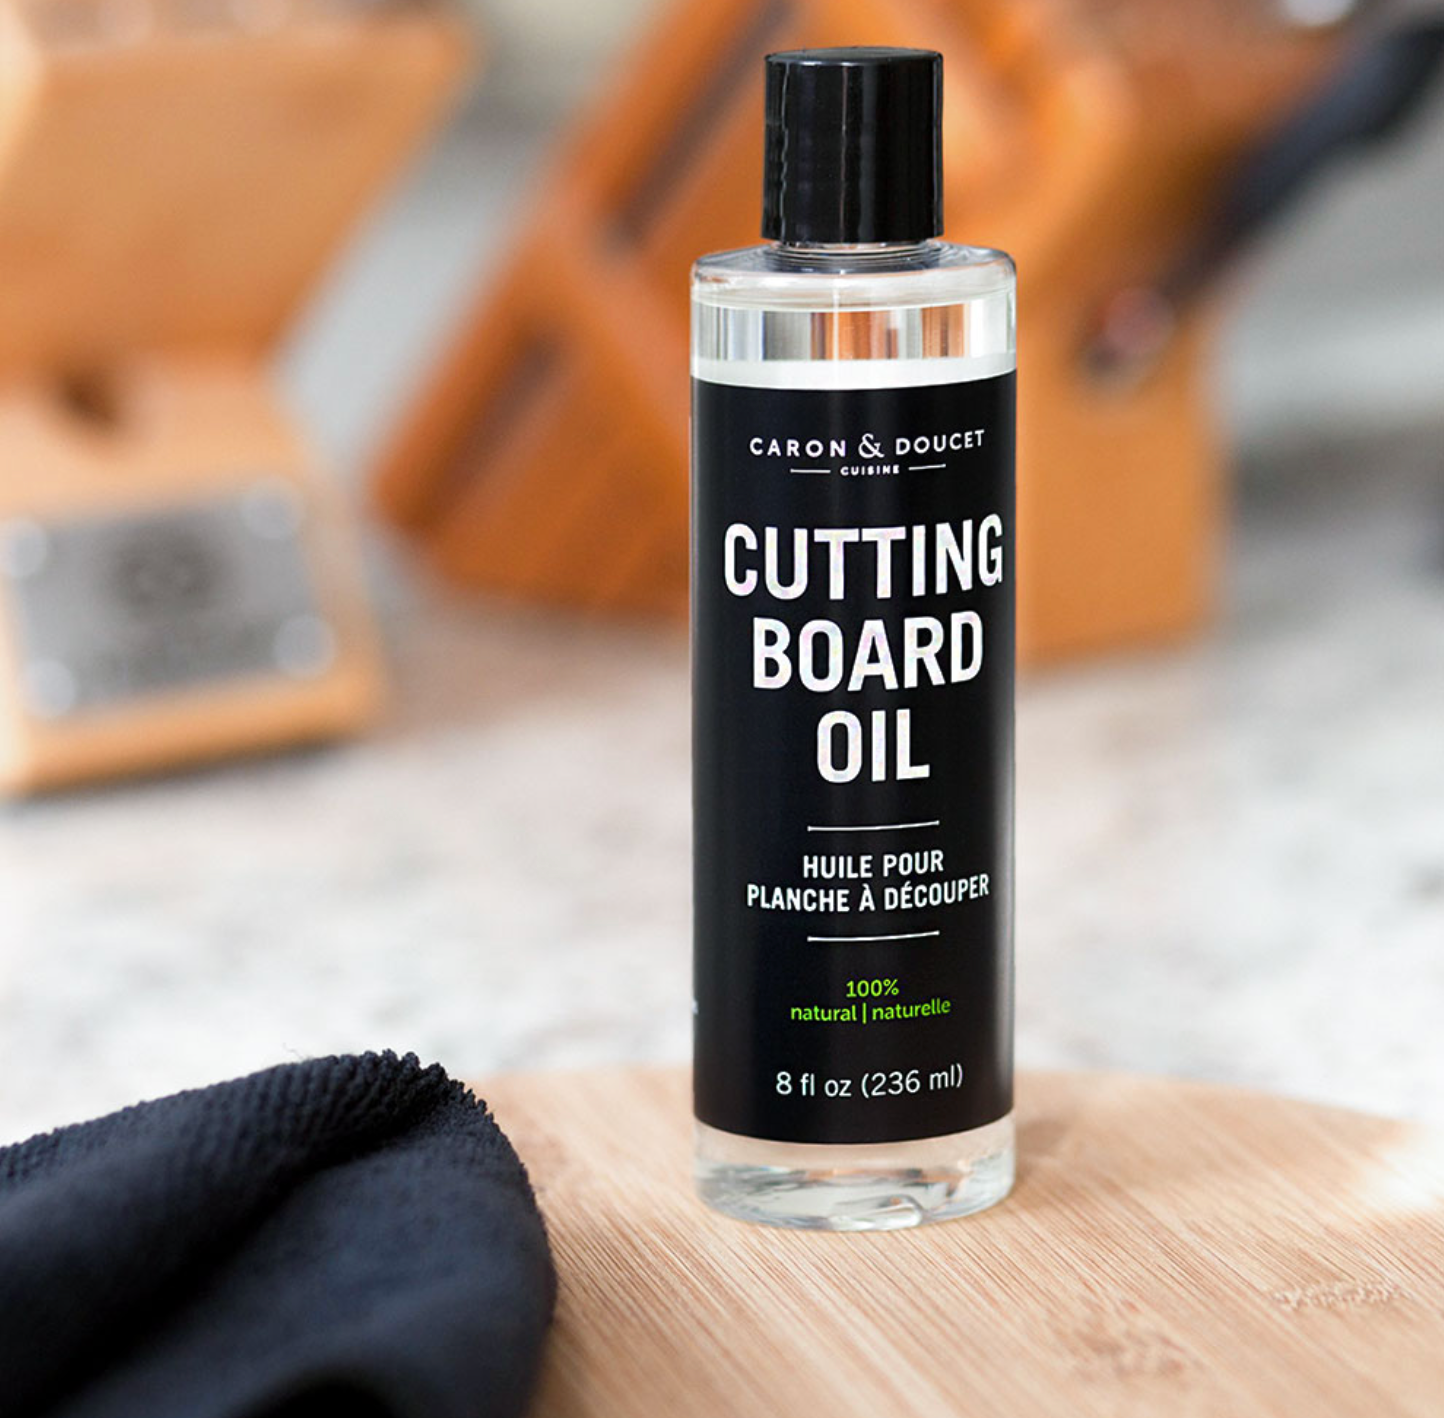 Caron & Doucet - Cutting Board Oil